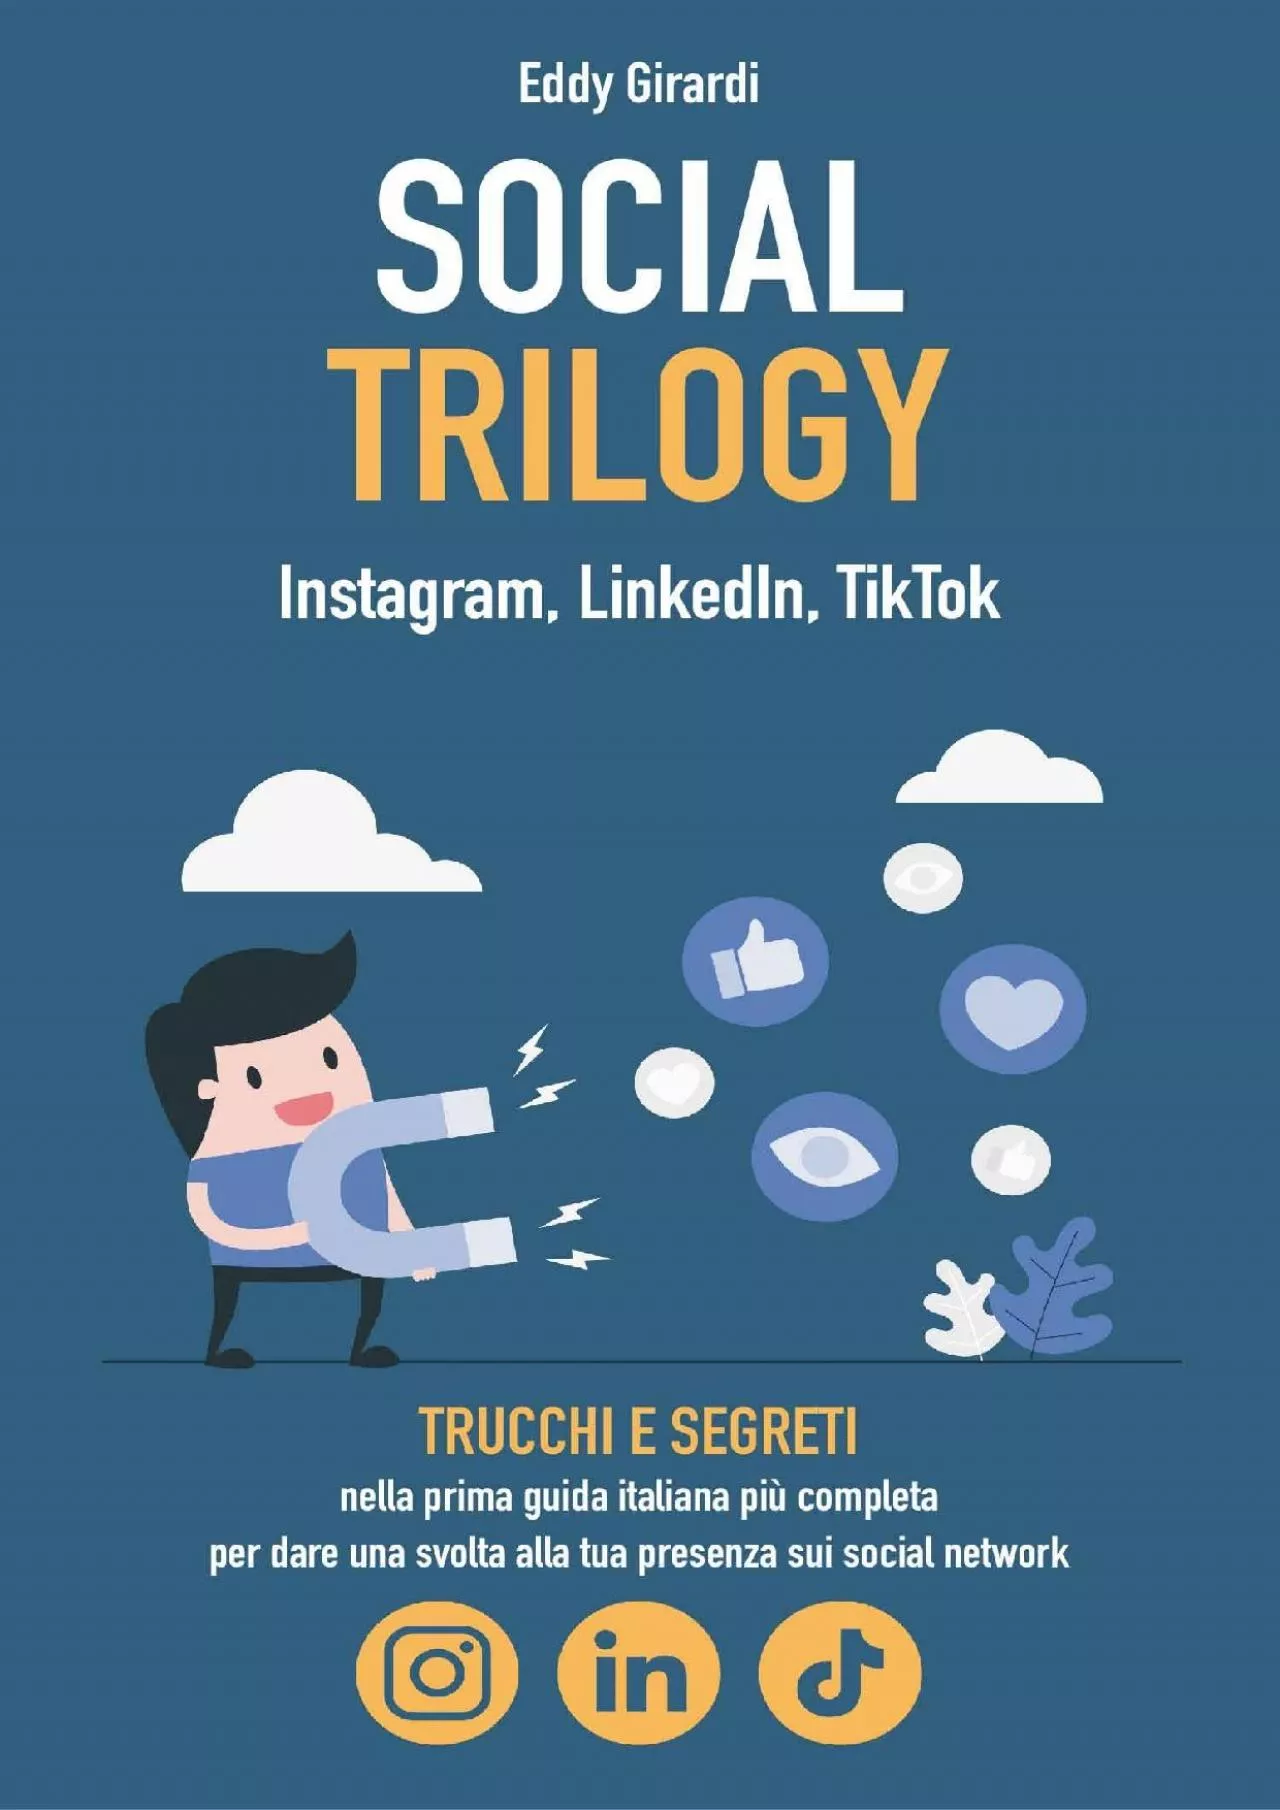 Social Trilogy - Instagram, LinkedIn, TikTok: trucchi e segreti nella prima guida italiana